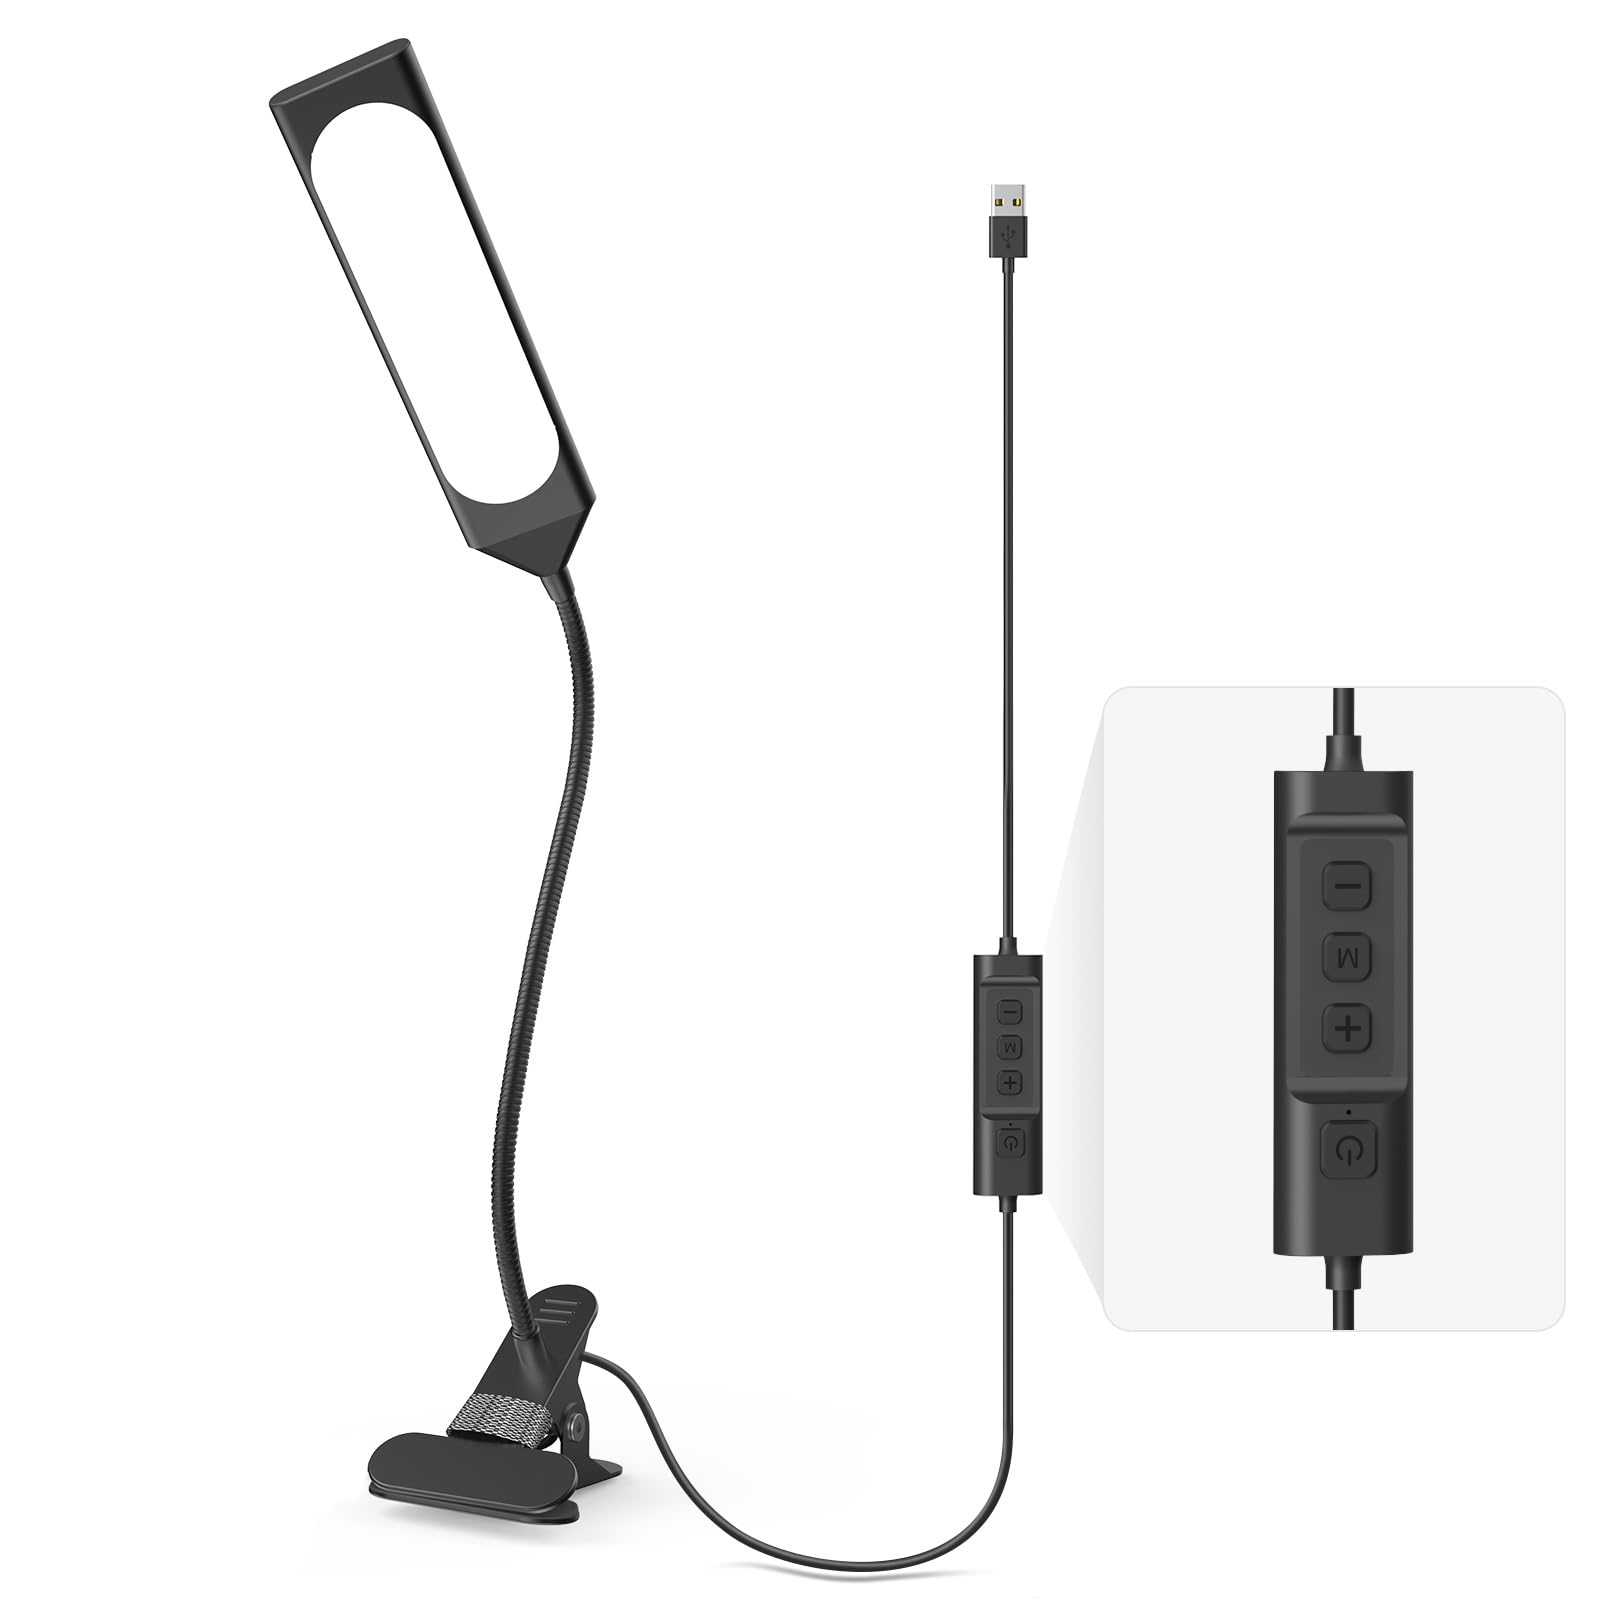 GARMESE LED Desk Lamp, Clip on Lamp for Home Office 5W Eye-Caring USB Light Gooseneck Lamp Dimmable 6 Brightness Levels 3 Color Temperatures Reading Lamp for Bed Headboard Black 5W